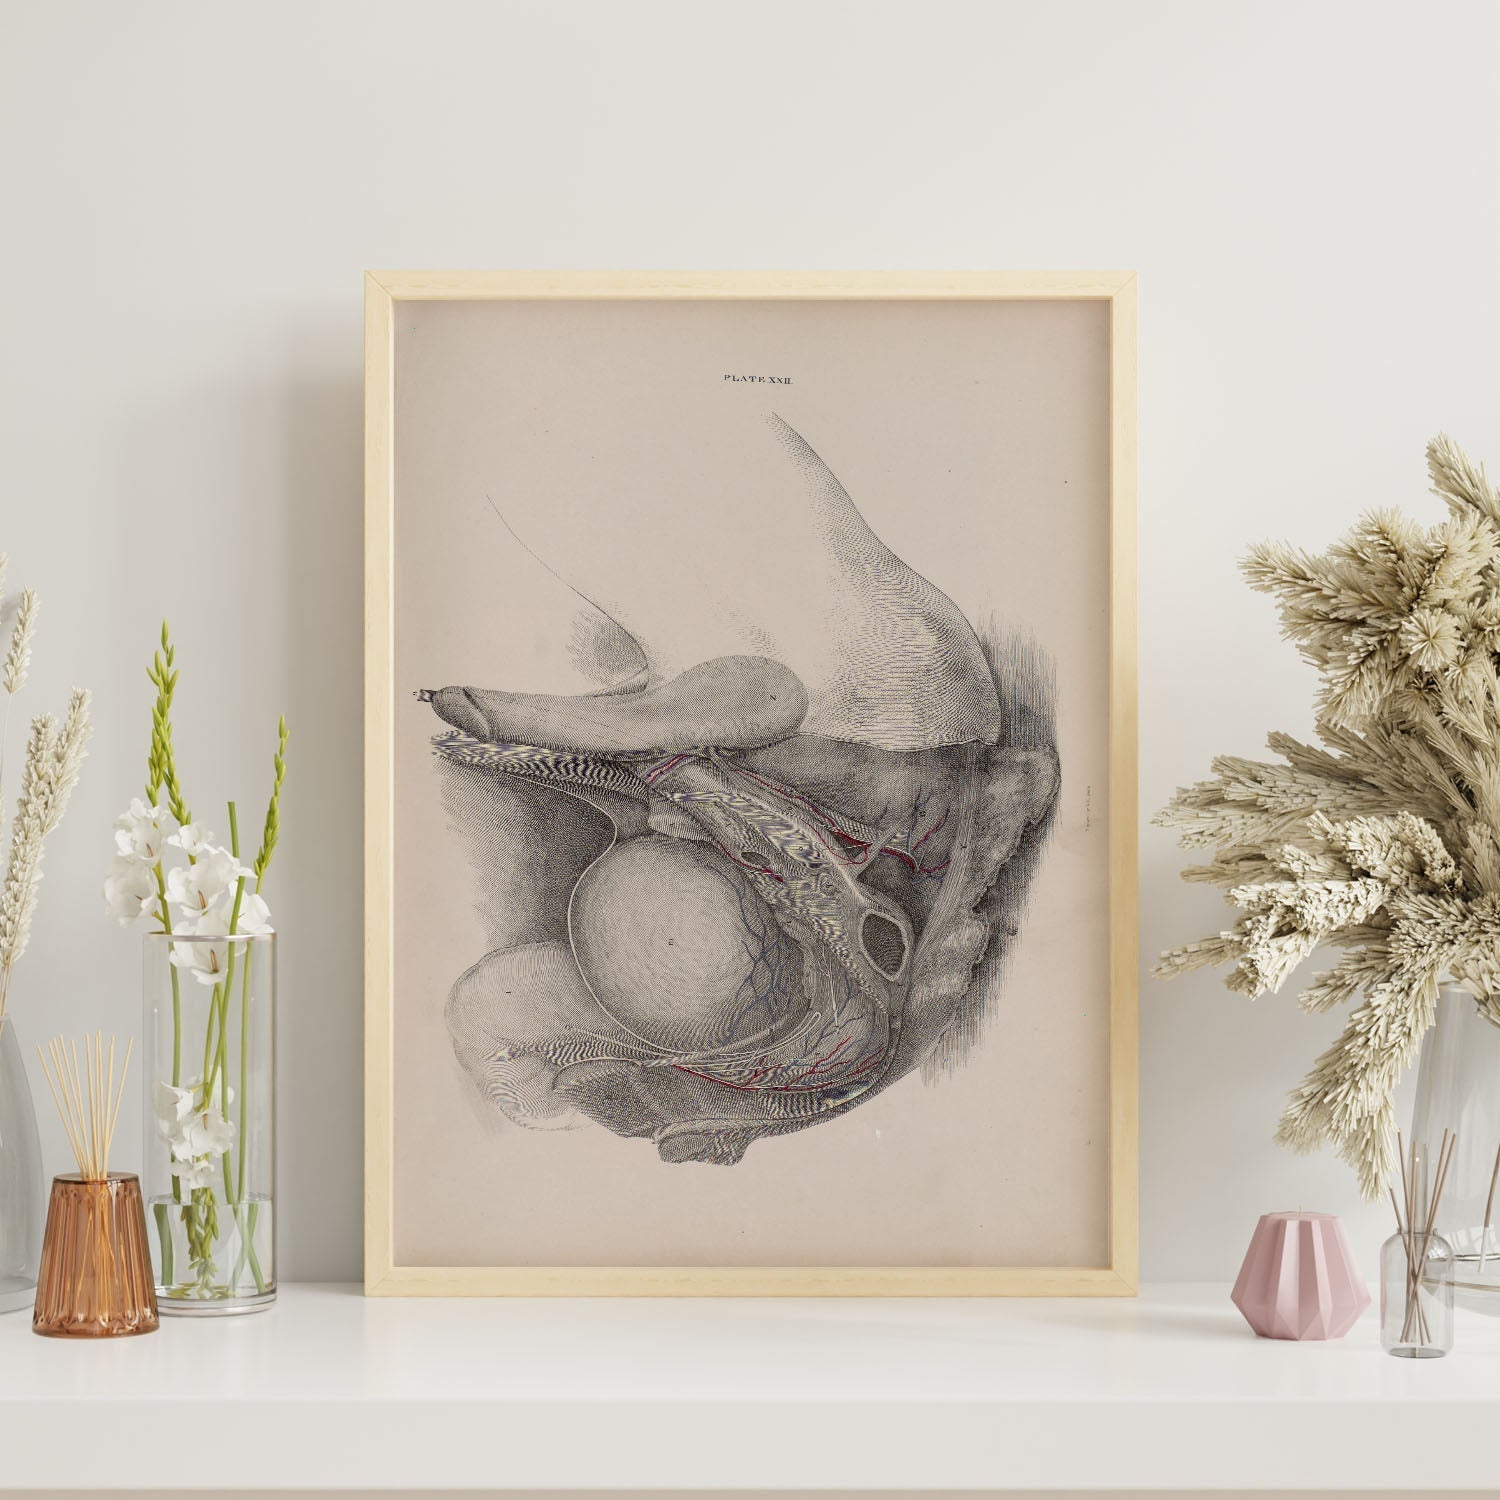 Dissection of the pelvis, urogenital system, male-Artwork-Nacnic-Nacnic Estudio SL